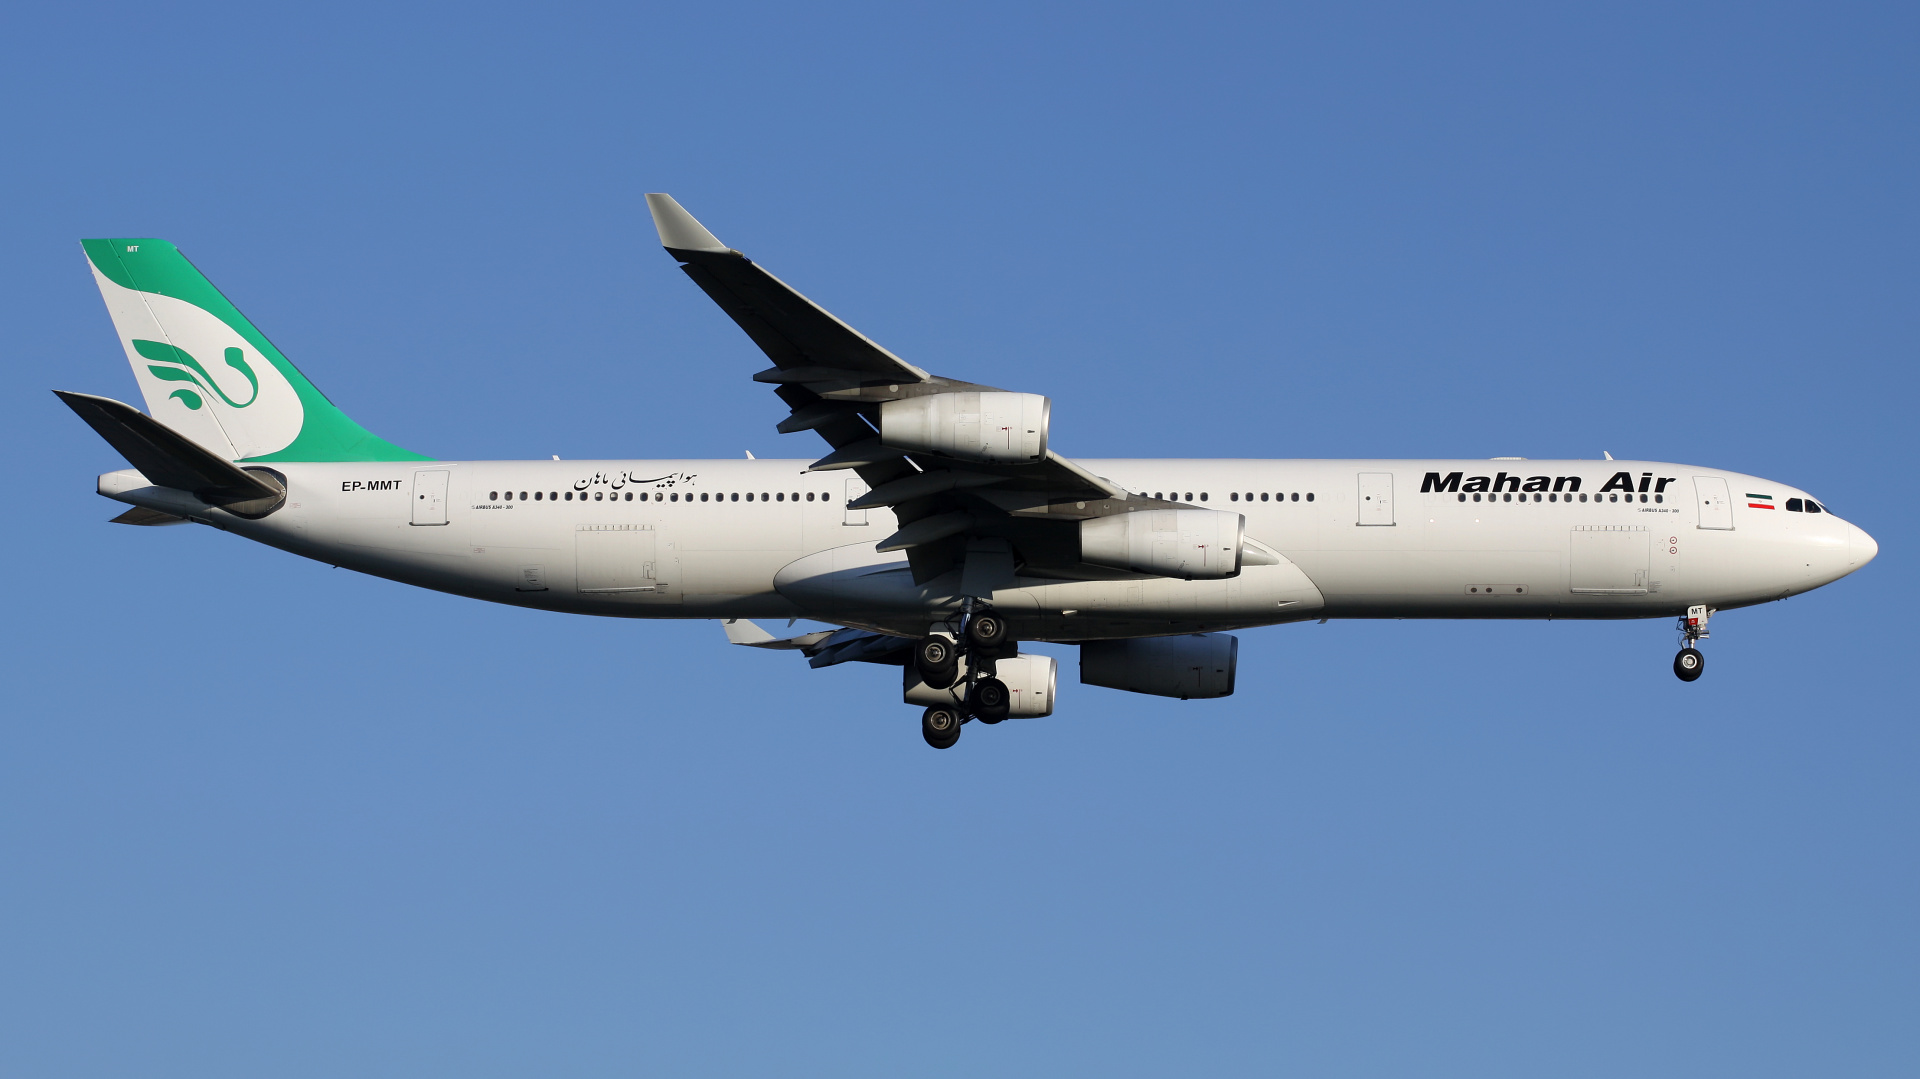 EP-MMT, Mahan Air (Samoloty » Port Lotniczy im. Atatürka w Stambule » Airbus A340-300)